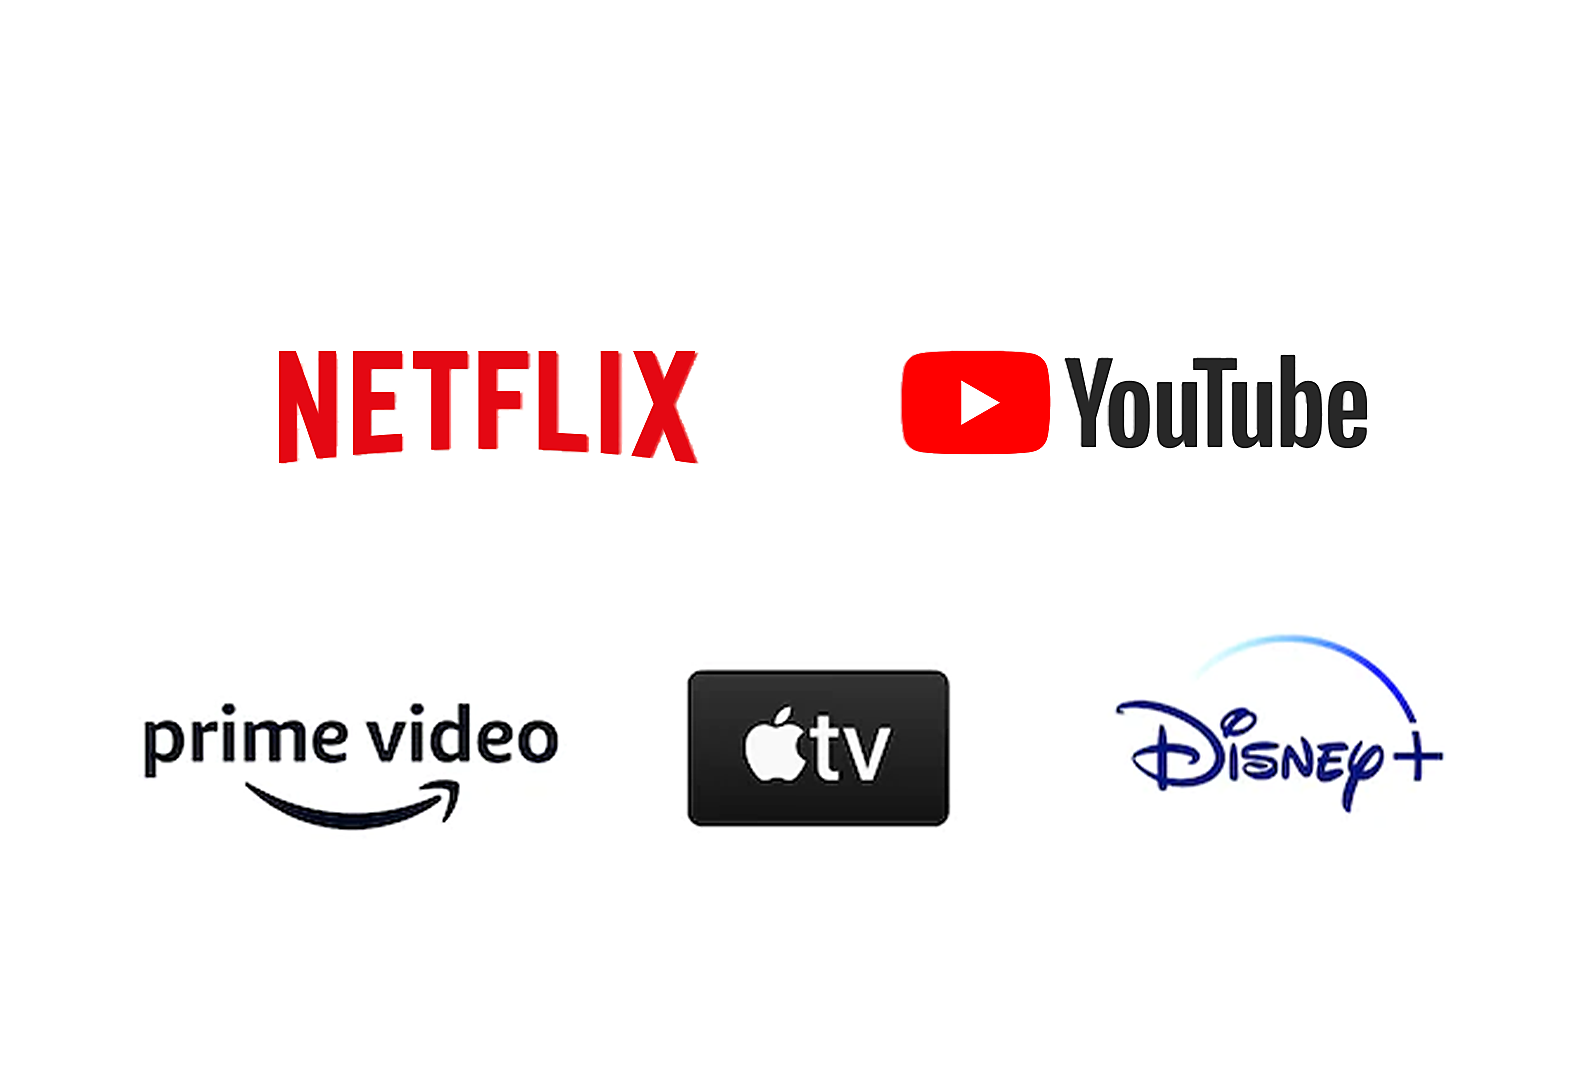 Logo's van Netflix, YouTube, Amazon prime video, Apple TV en Disney+